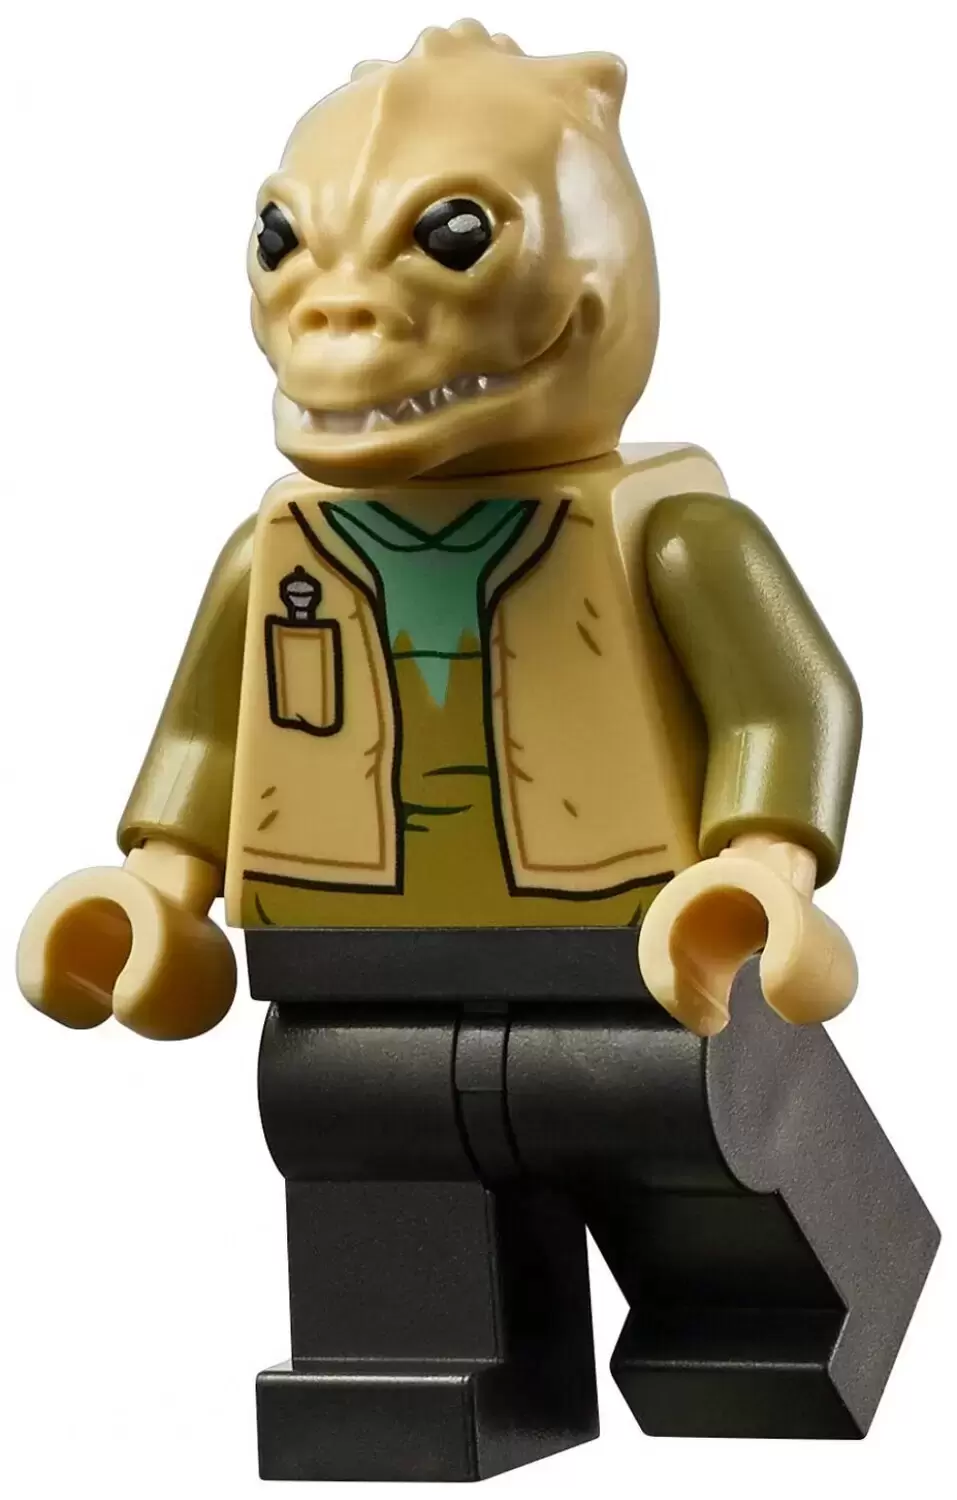 LEGO Sandtrooper Minifigure sw0894